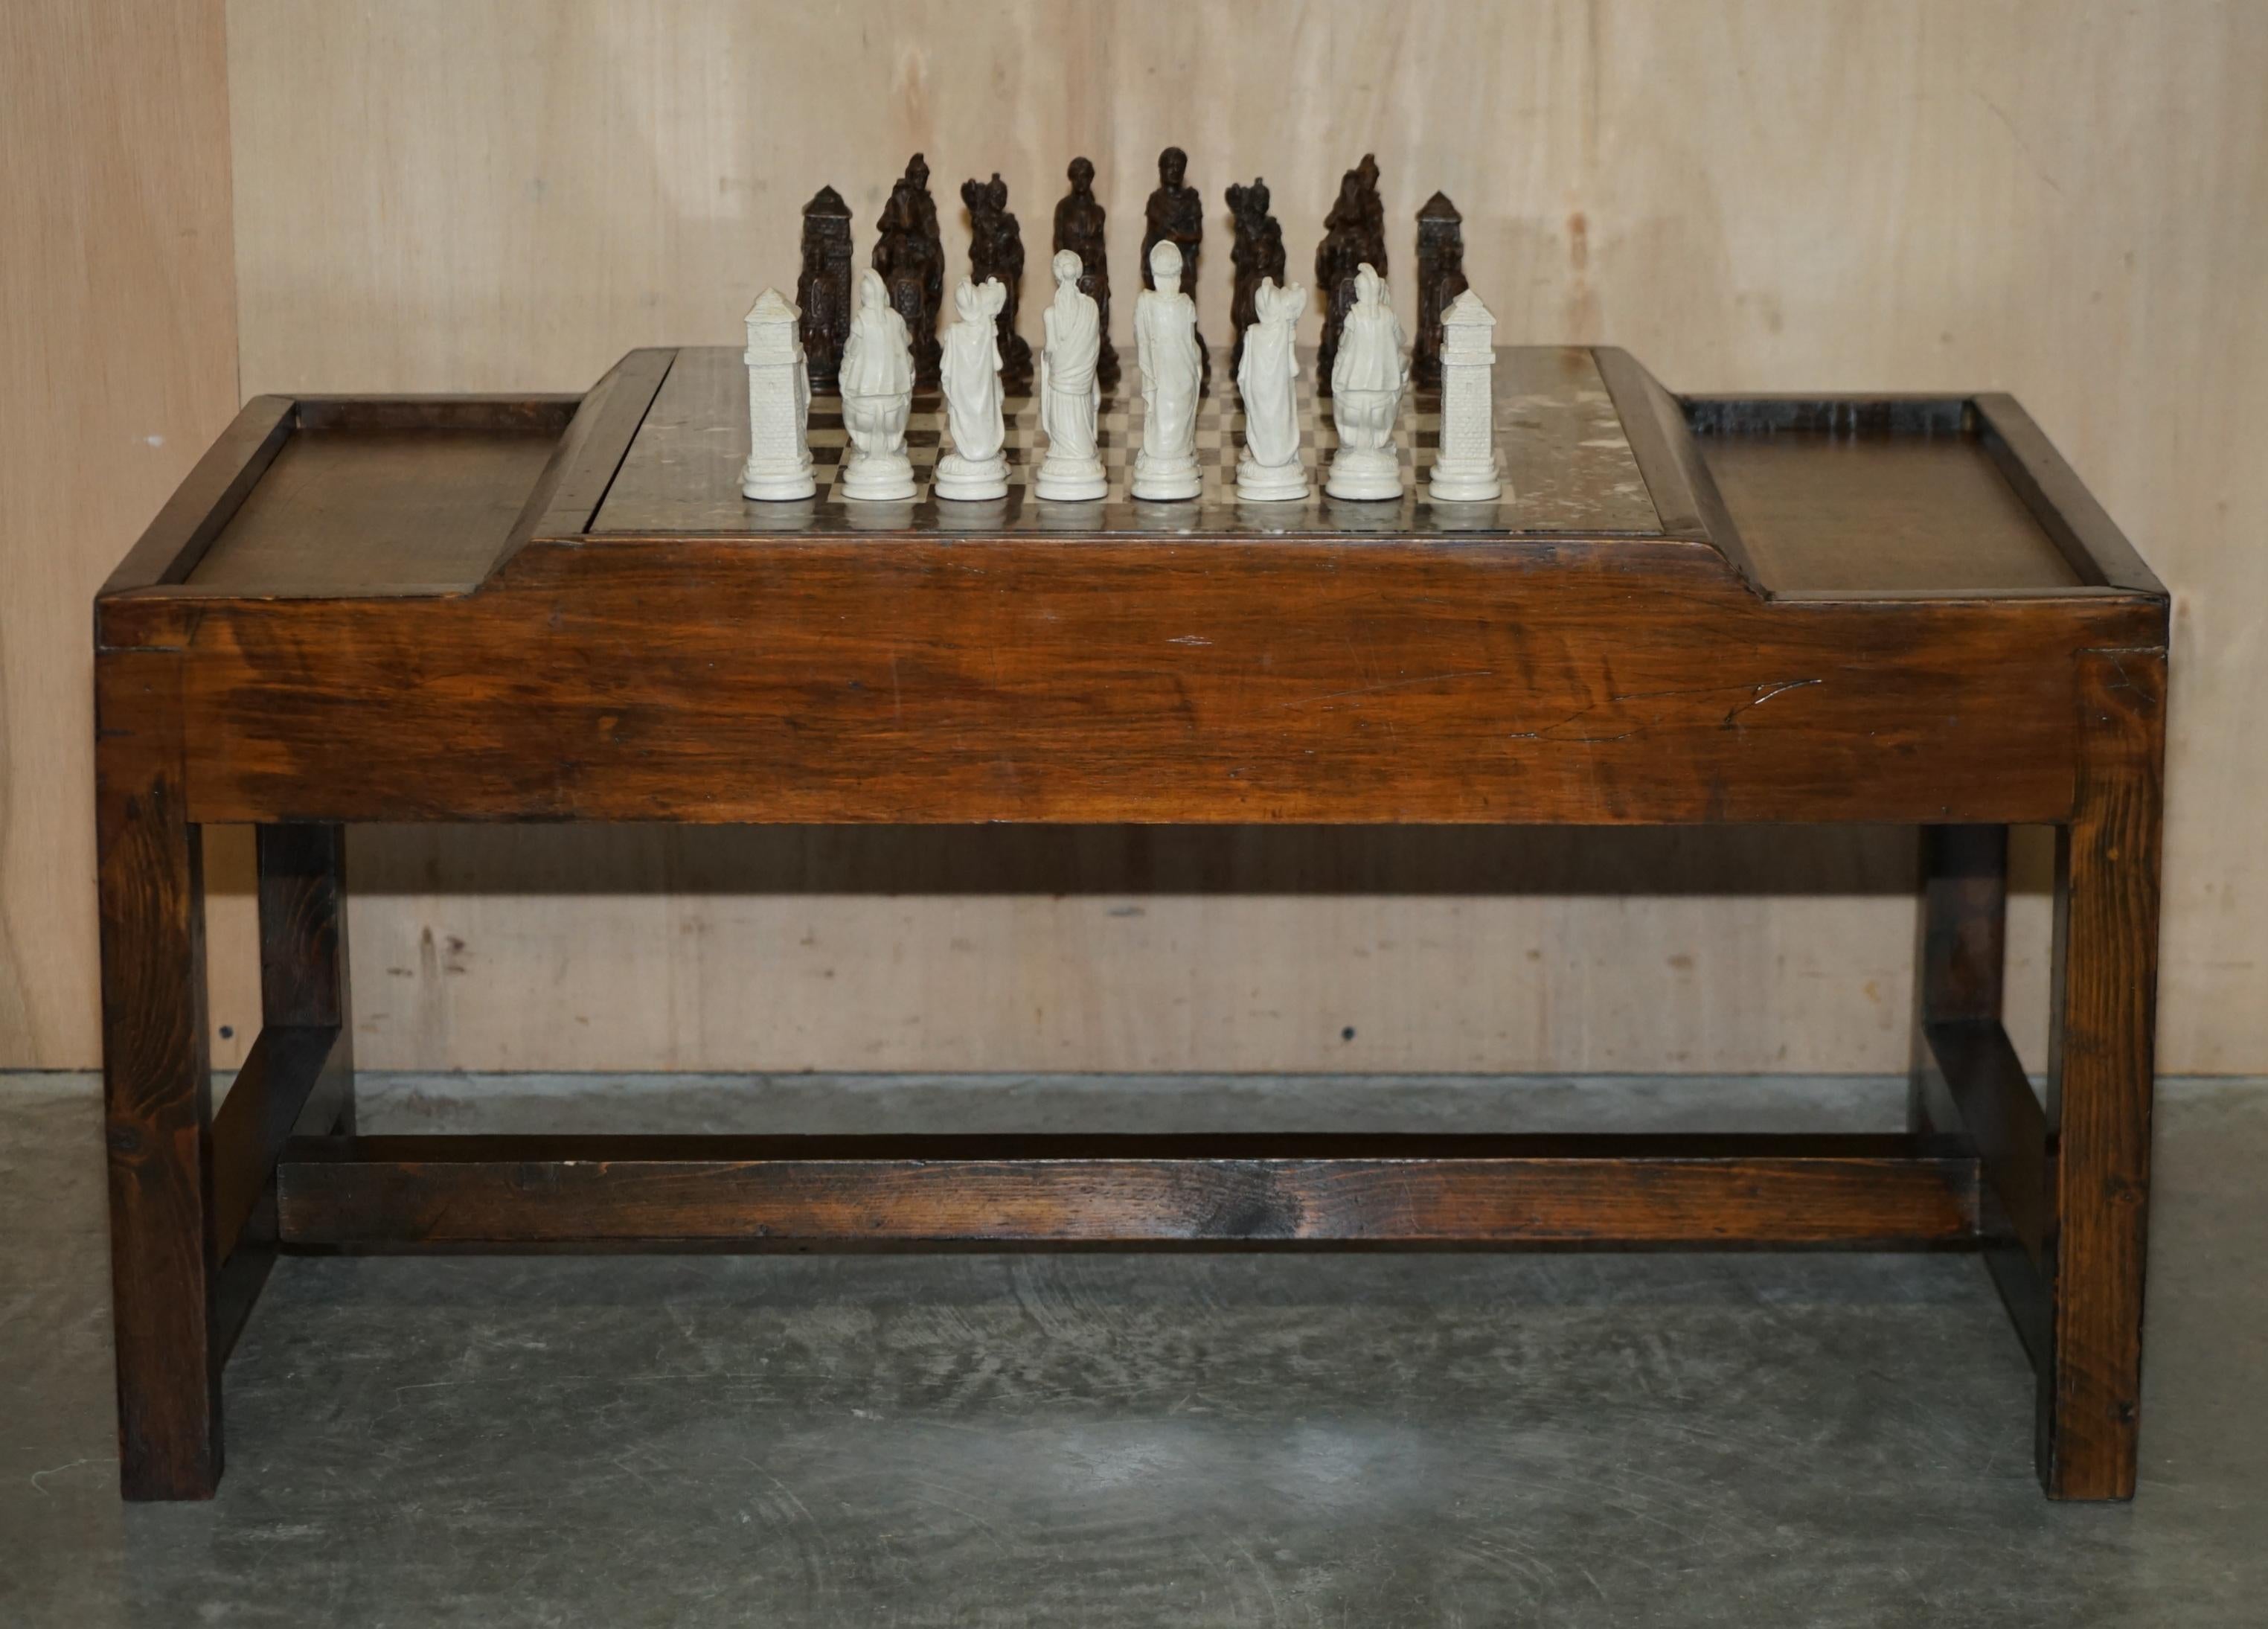 911 chess set